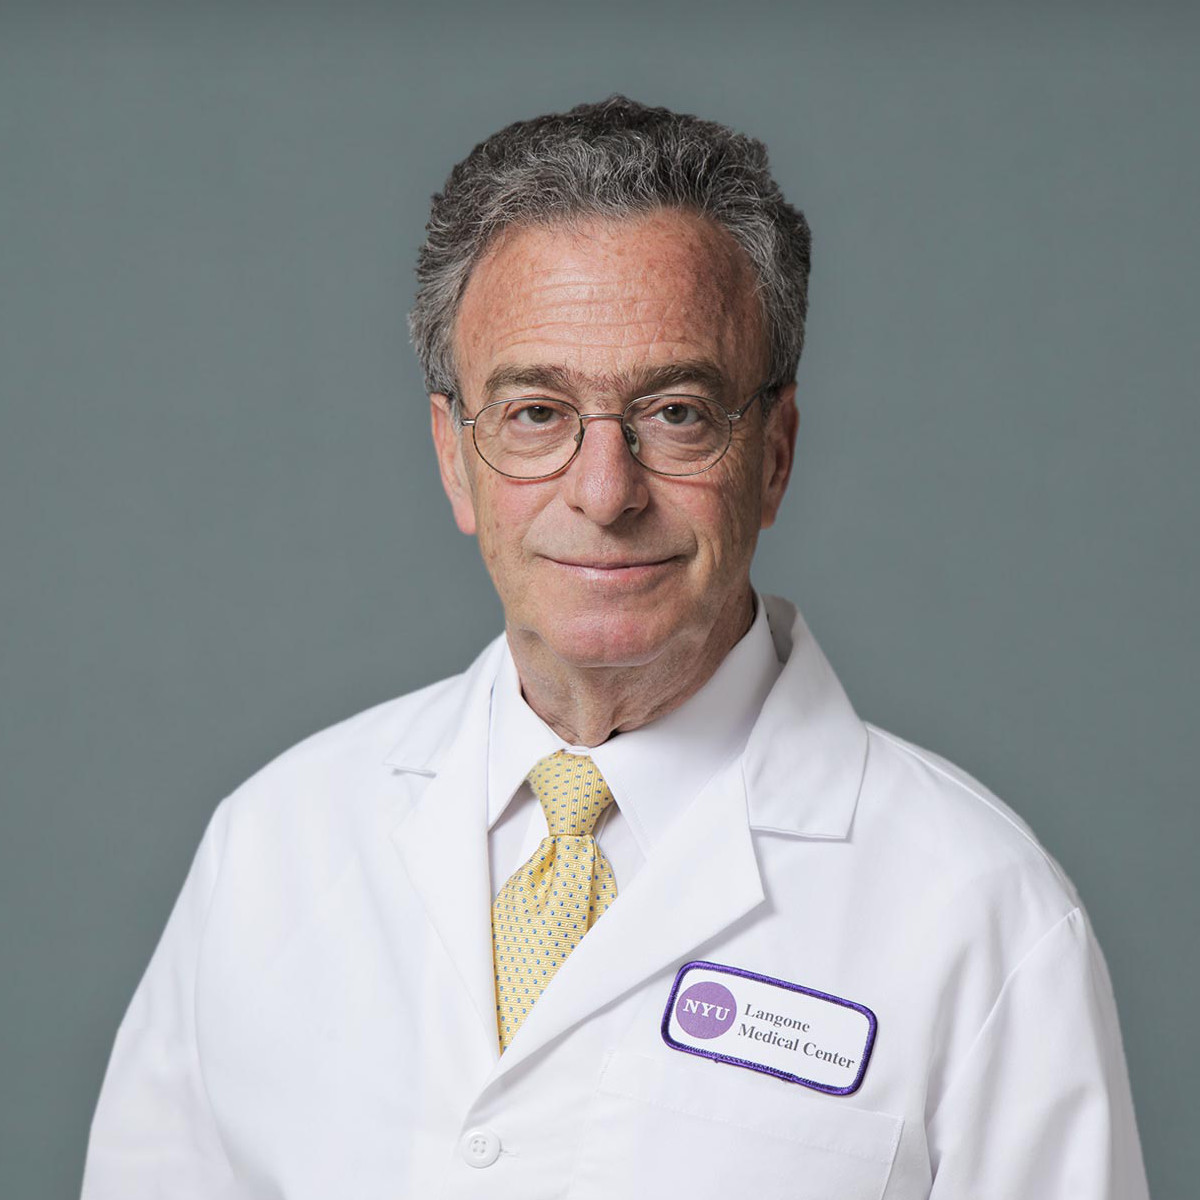 Stephen A. Smiles,MD. Rheumatology